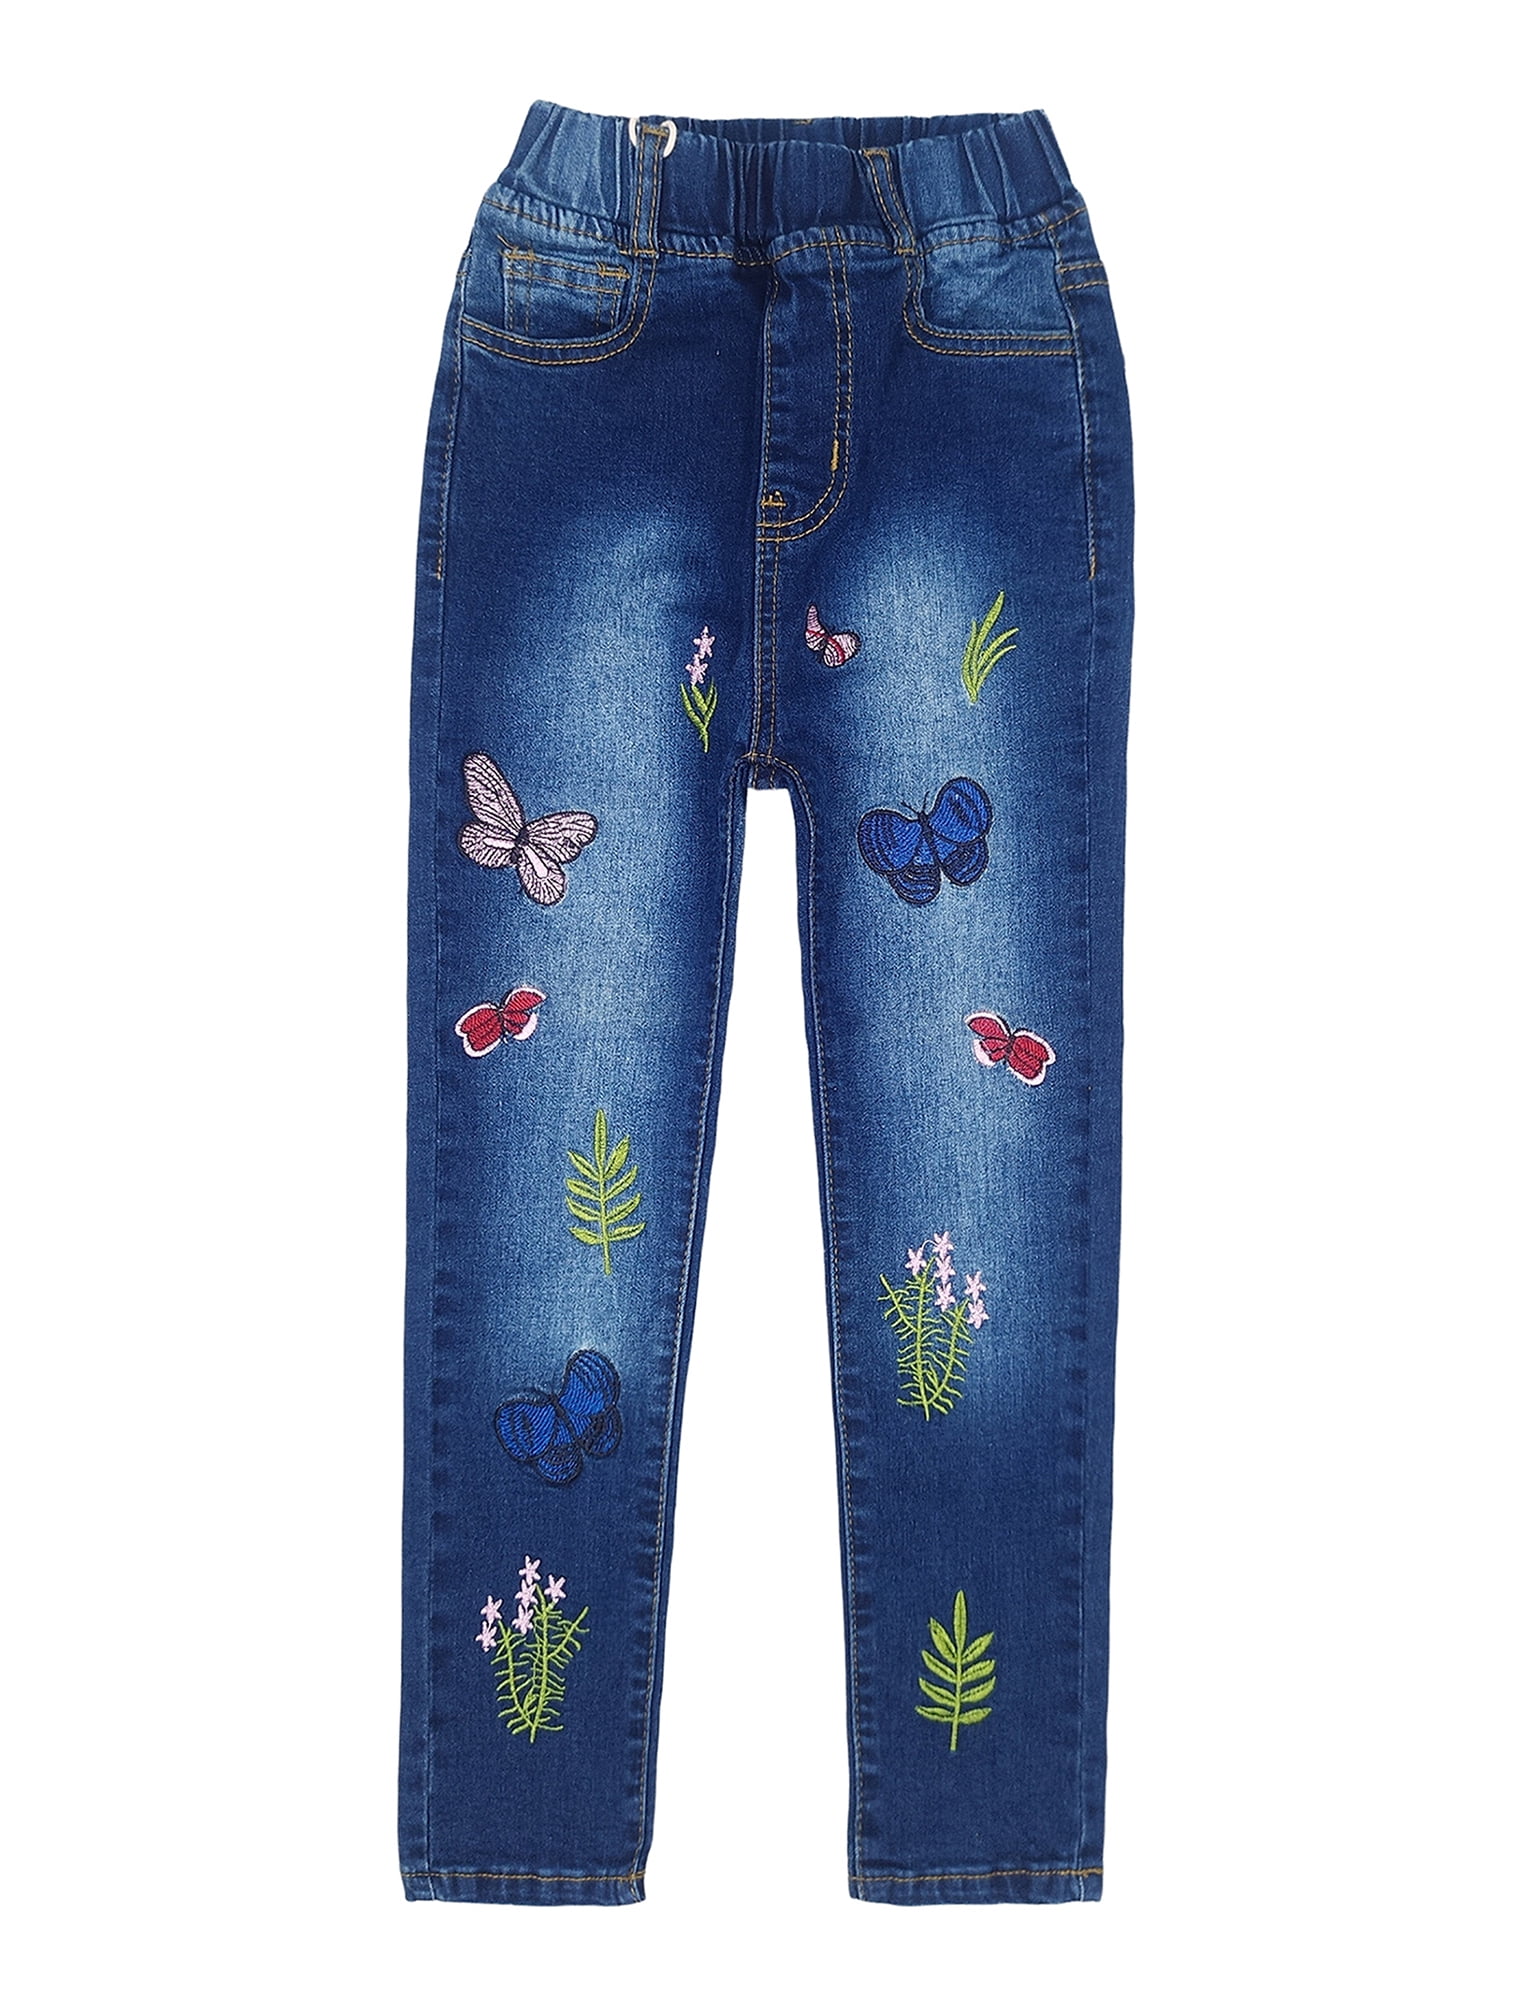 KIDSCOOL SPACE Little Girl Embroidered Jeans,Big Girls Elastic Waist Denim  Bottom Pants,11-12 Years